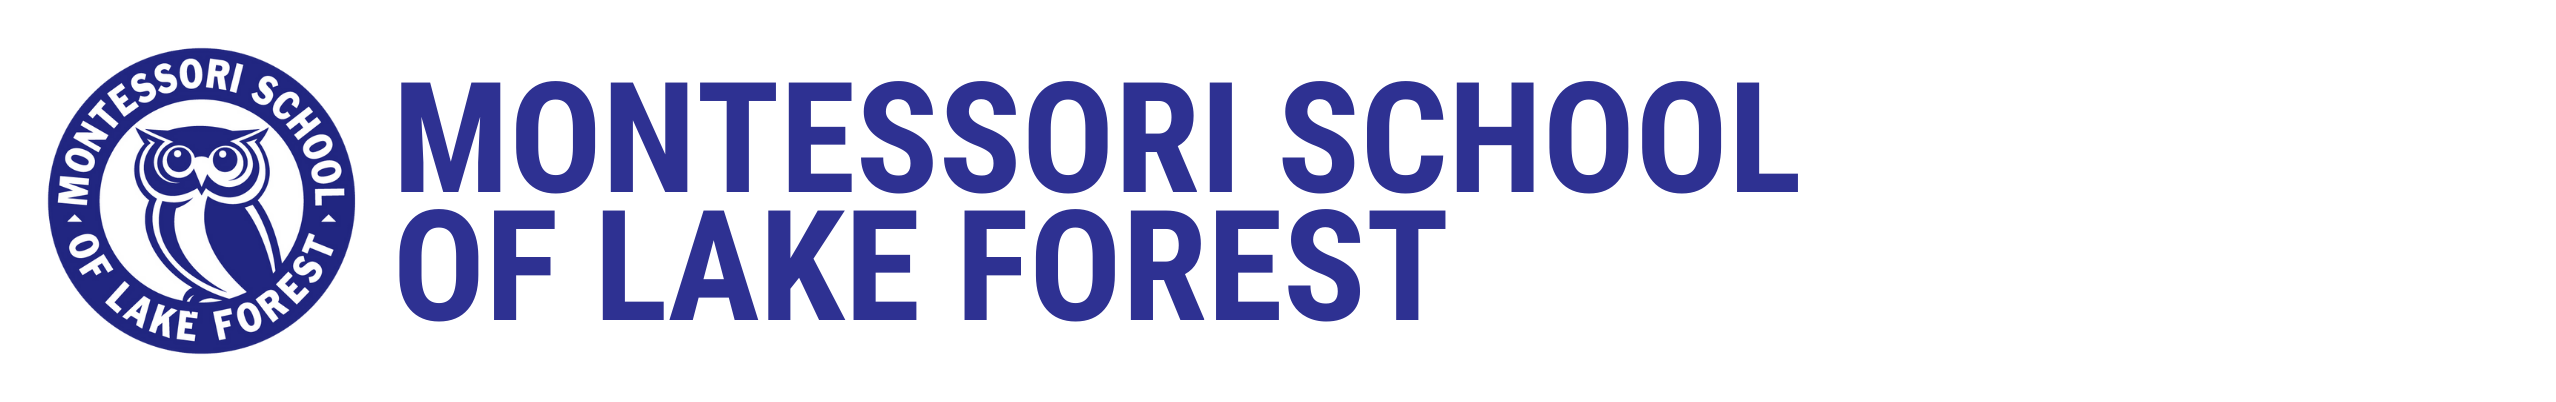 Montessori School of Lake Forest logo